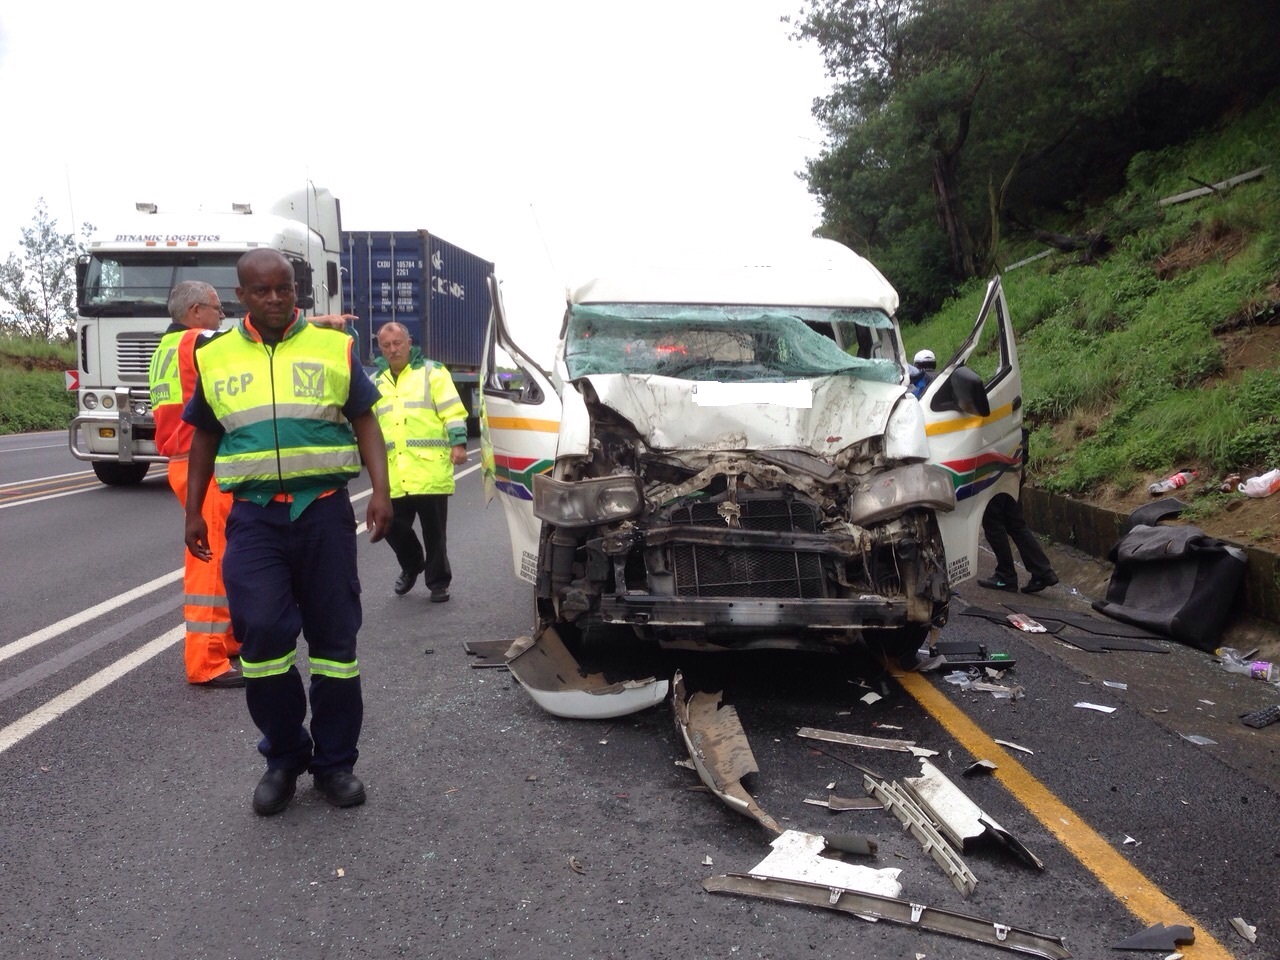 Van Reenen crash when minibus rear-ended truck leaves nine injured